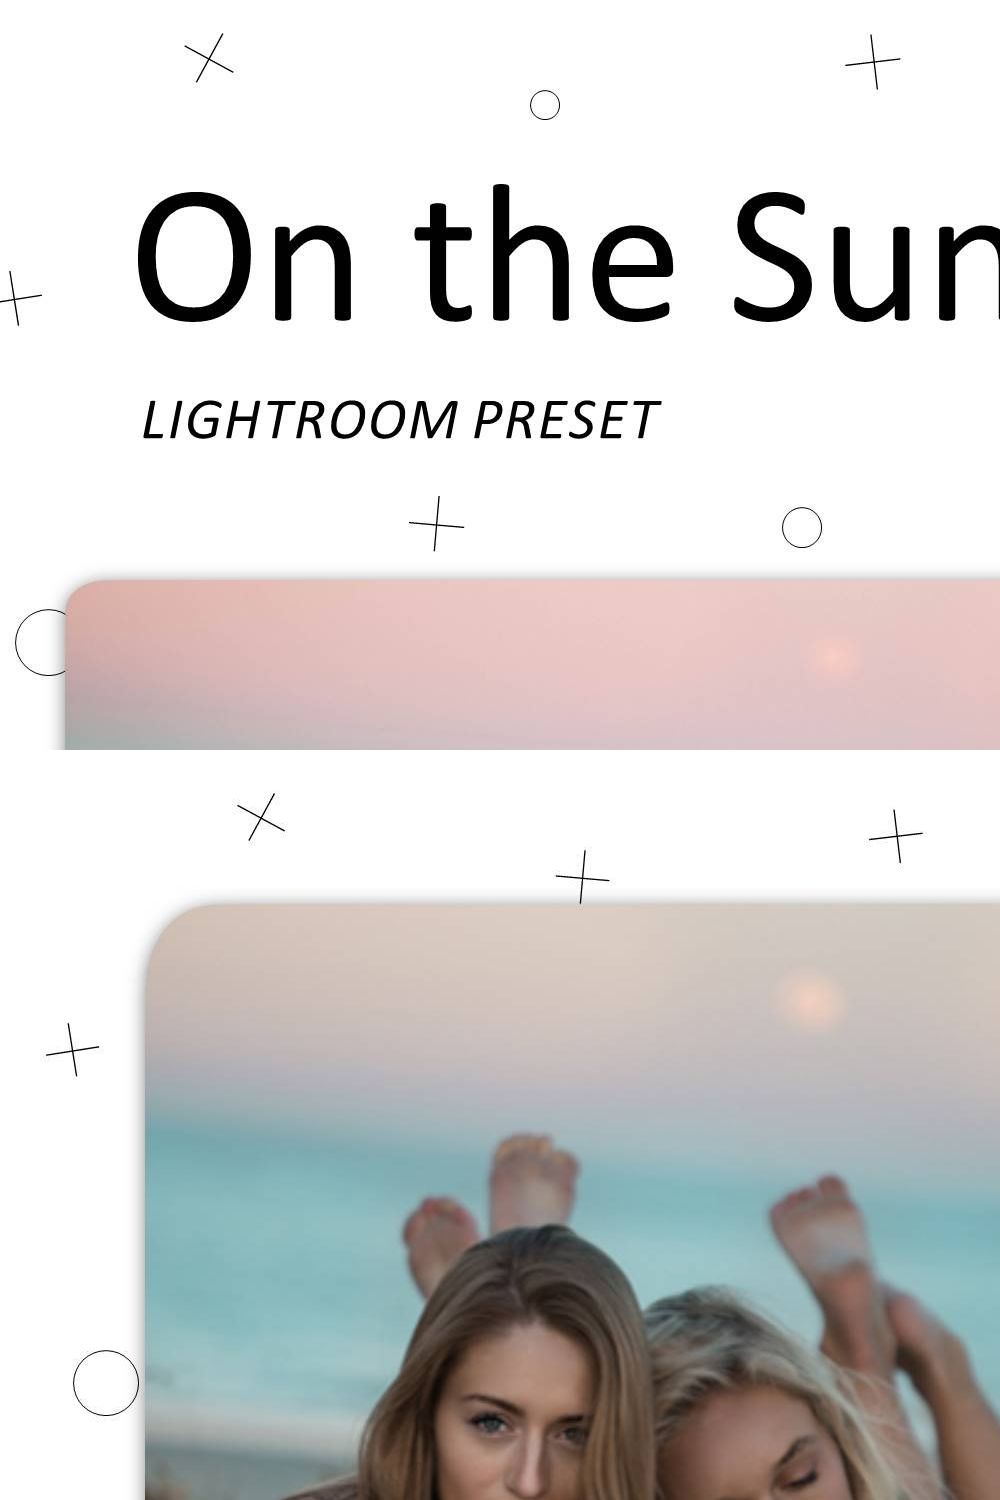 On the Sunset - Lightroom Presets pinterest preview image.